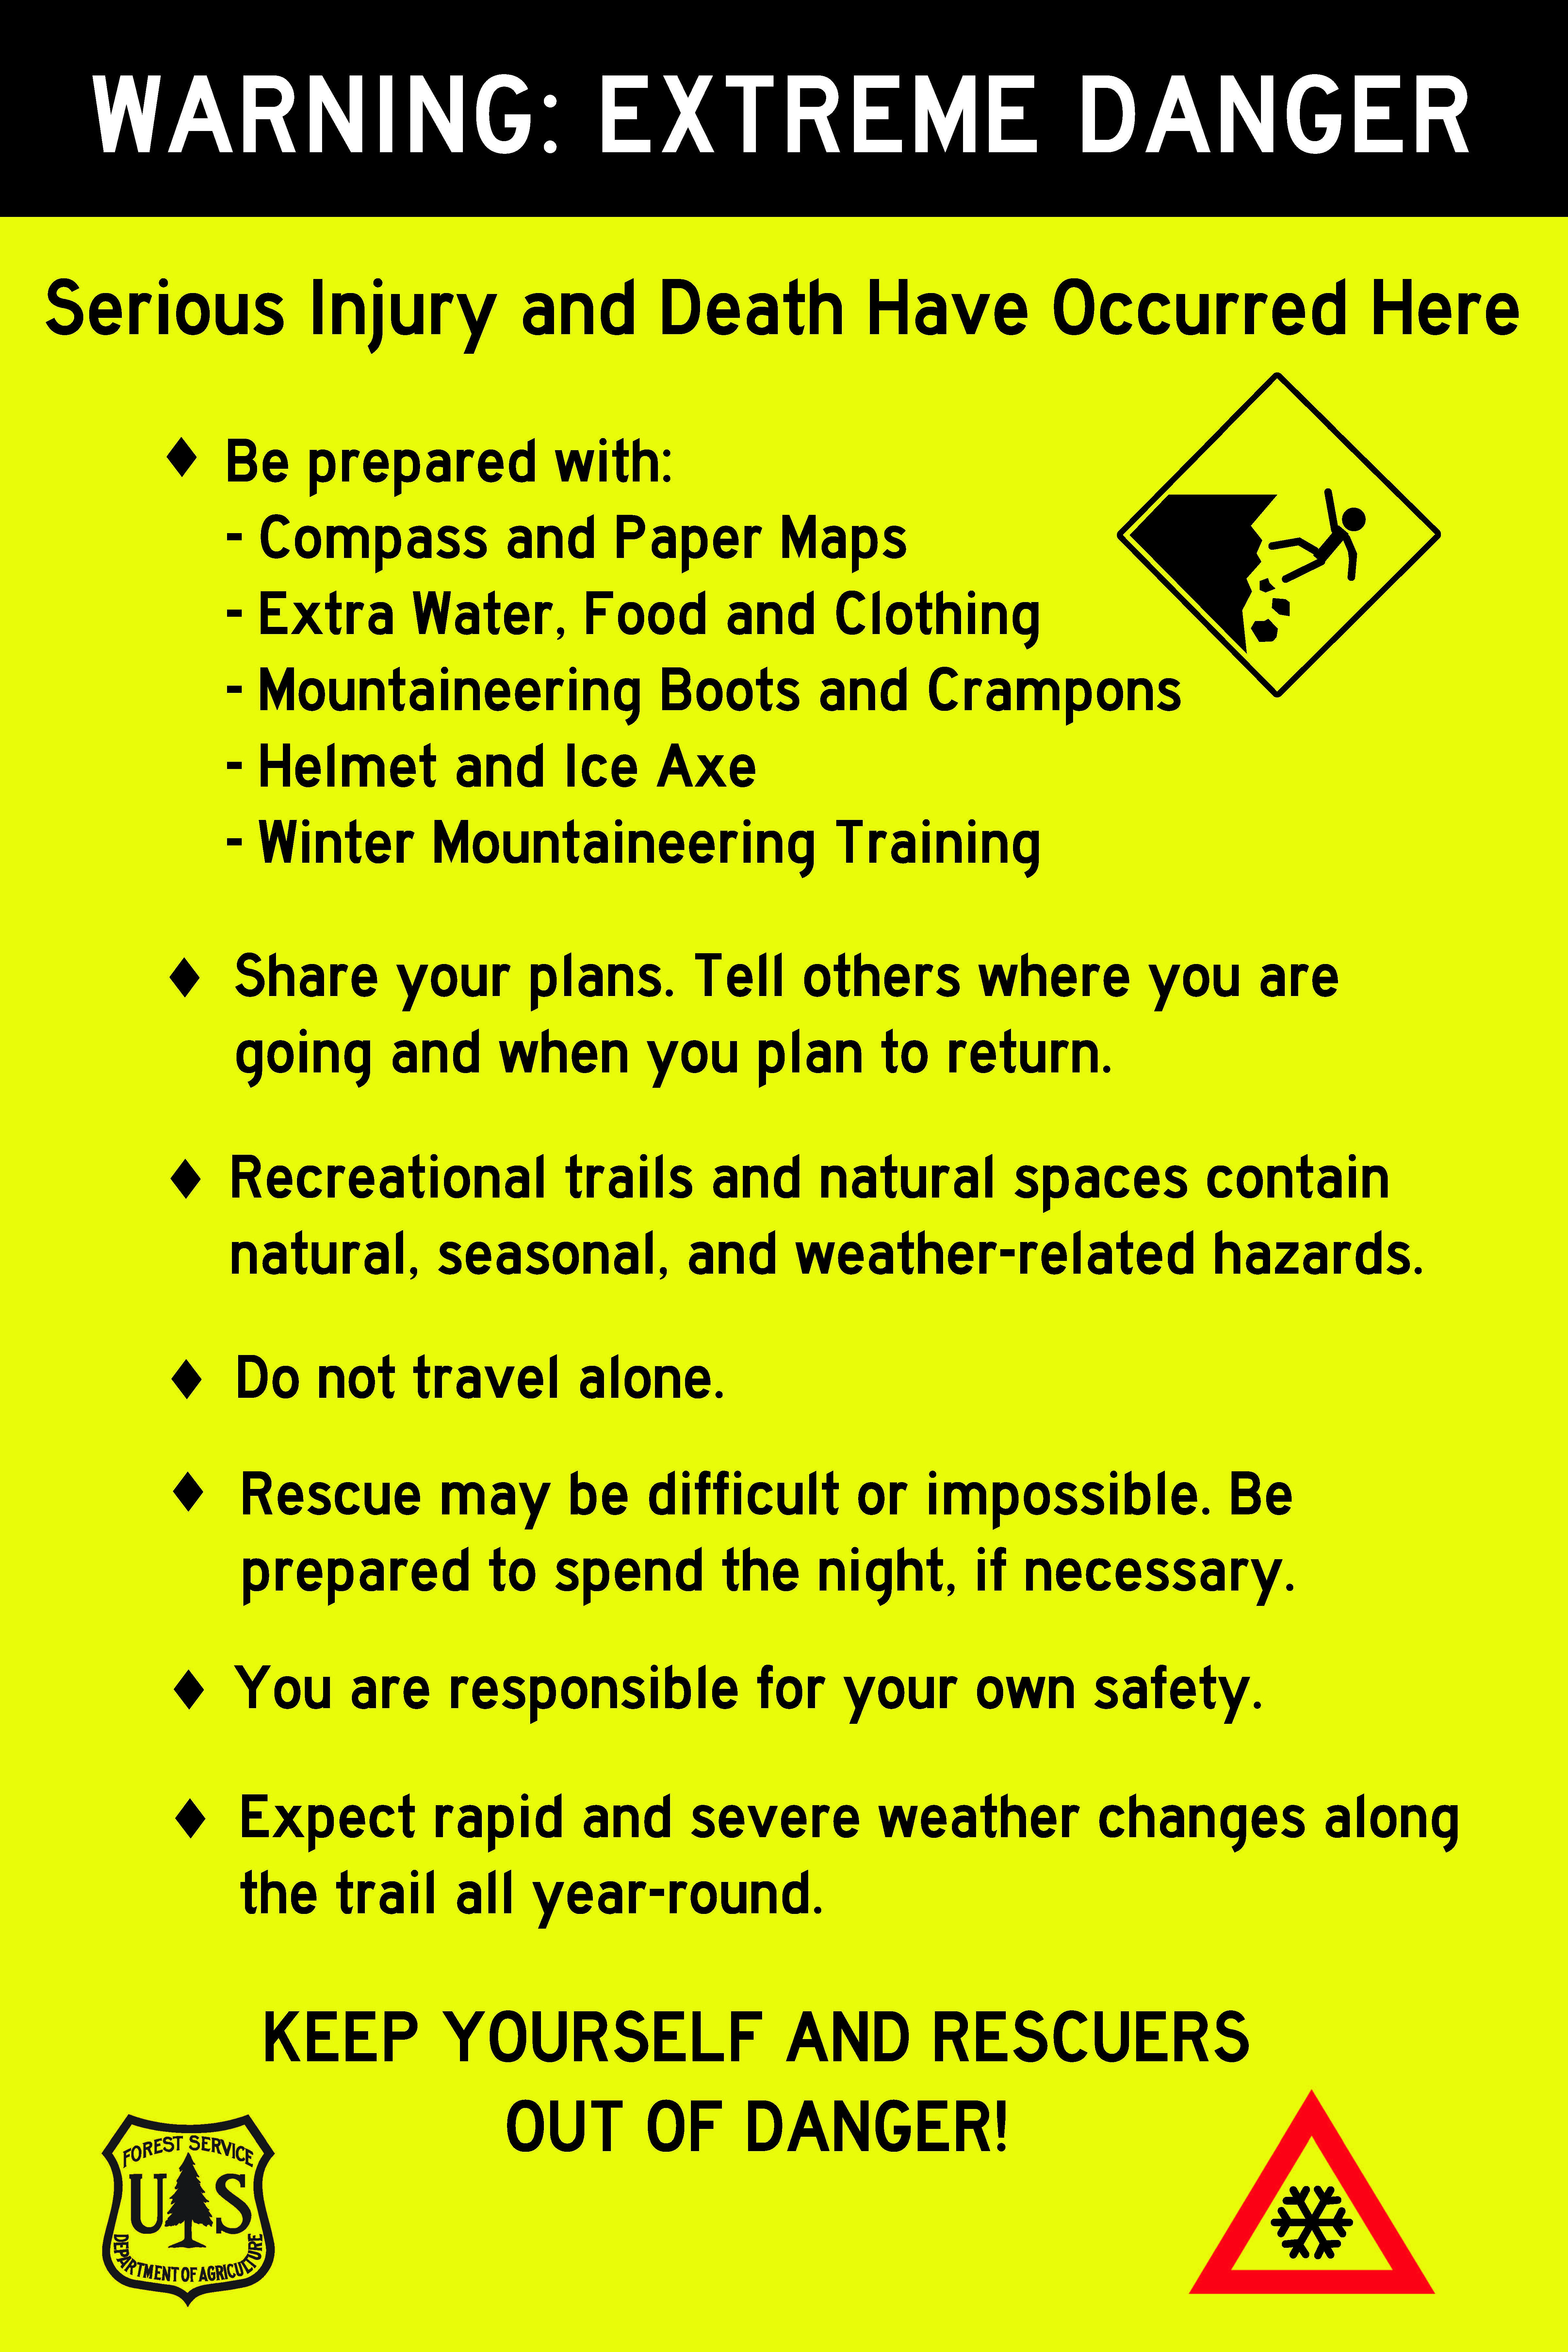 Warning sign for high-elevation hiking